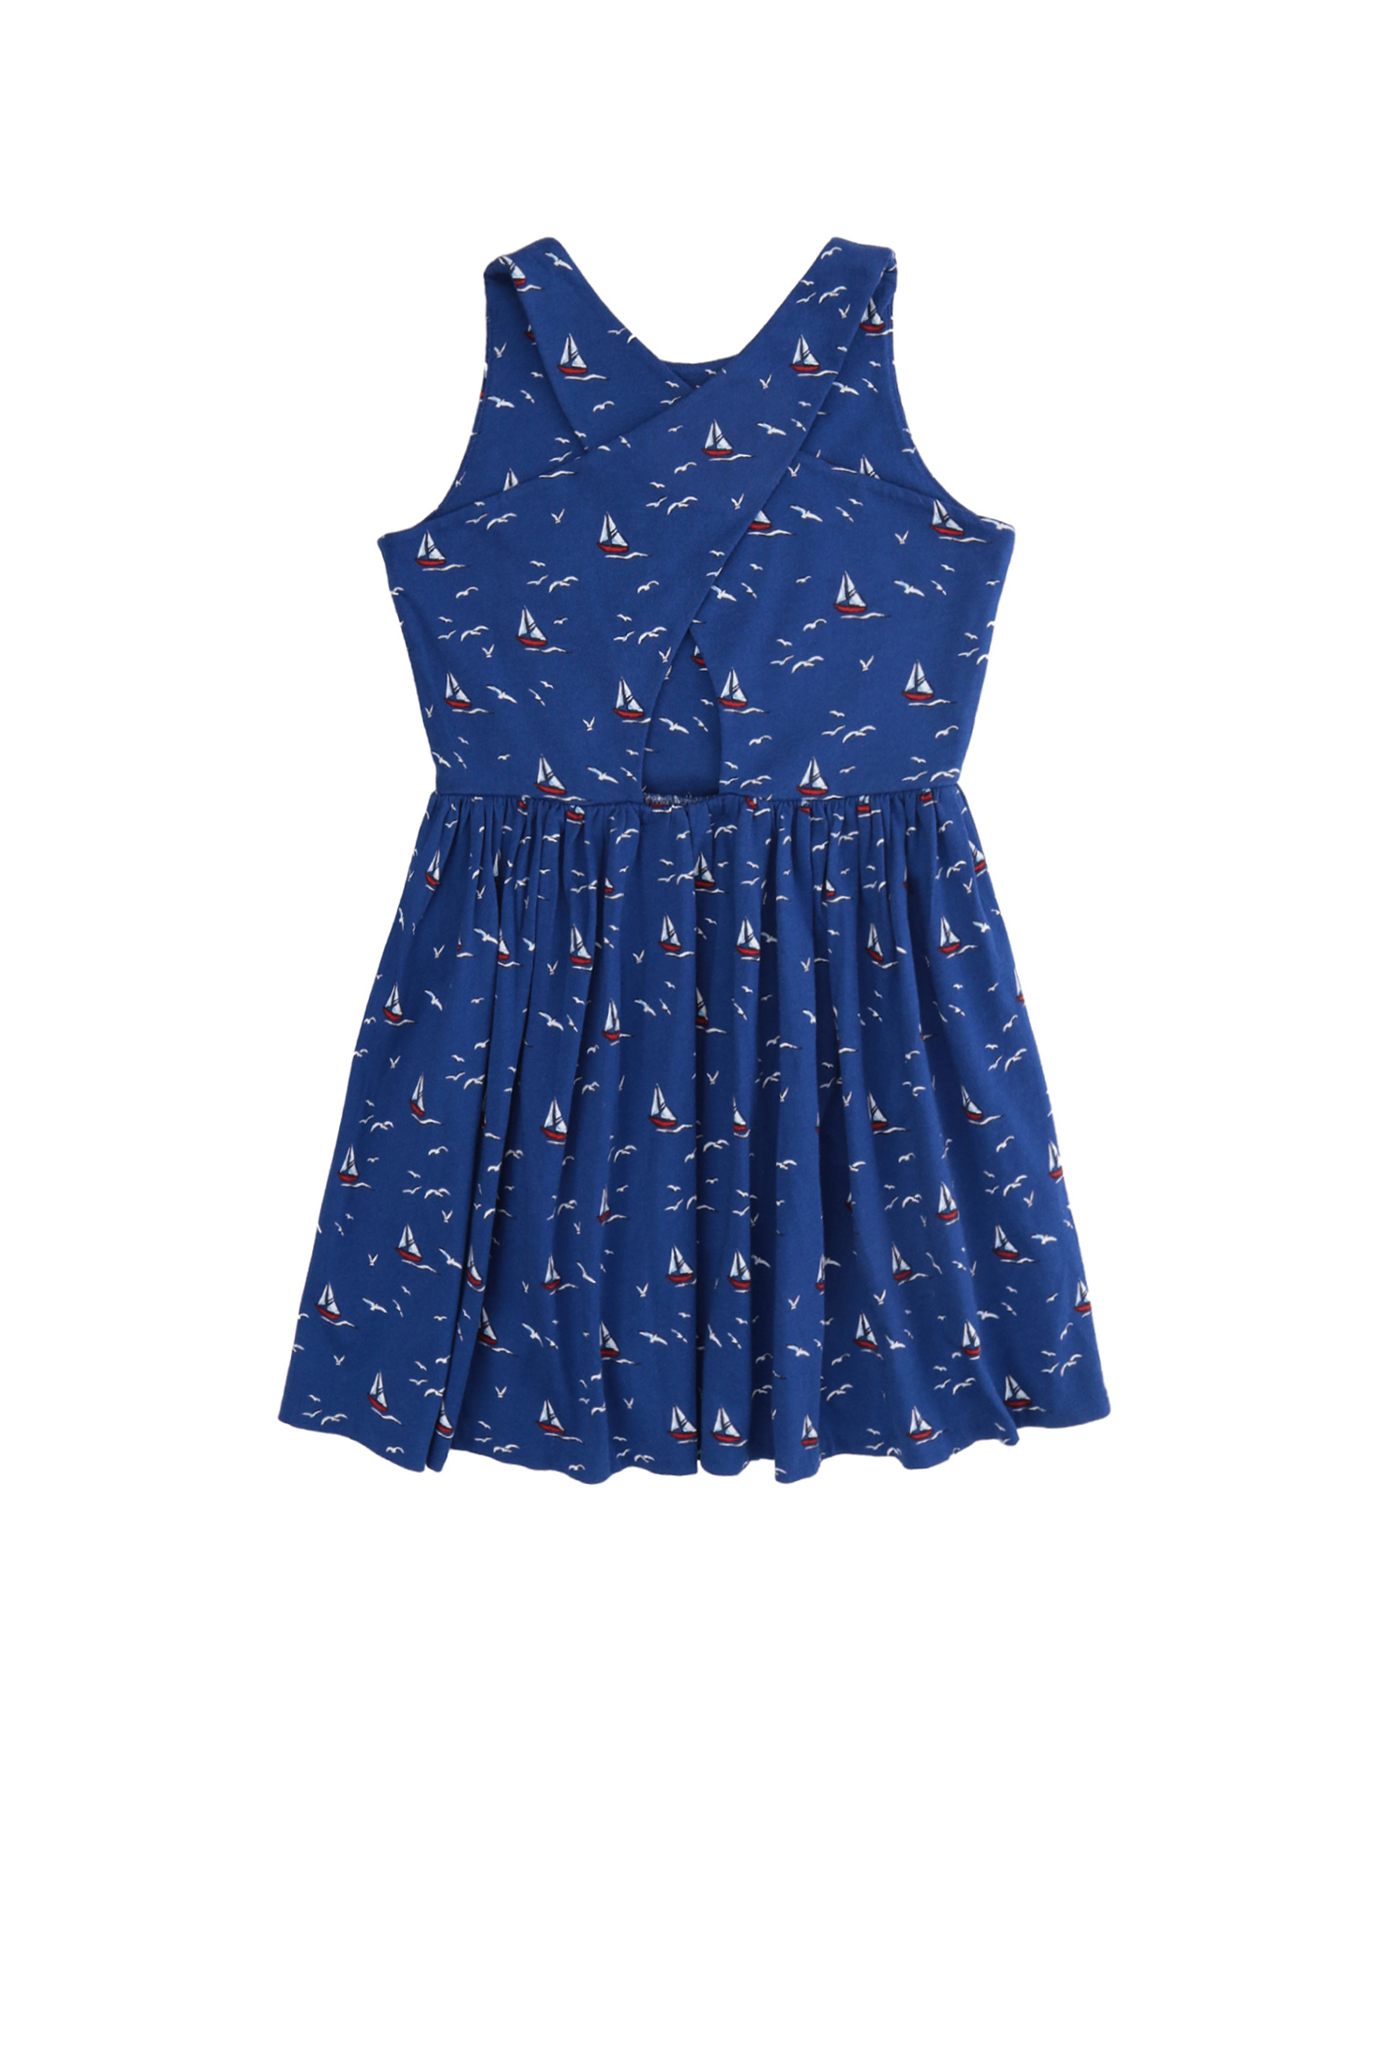 Дитяча синя сукня 1